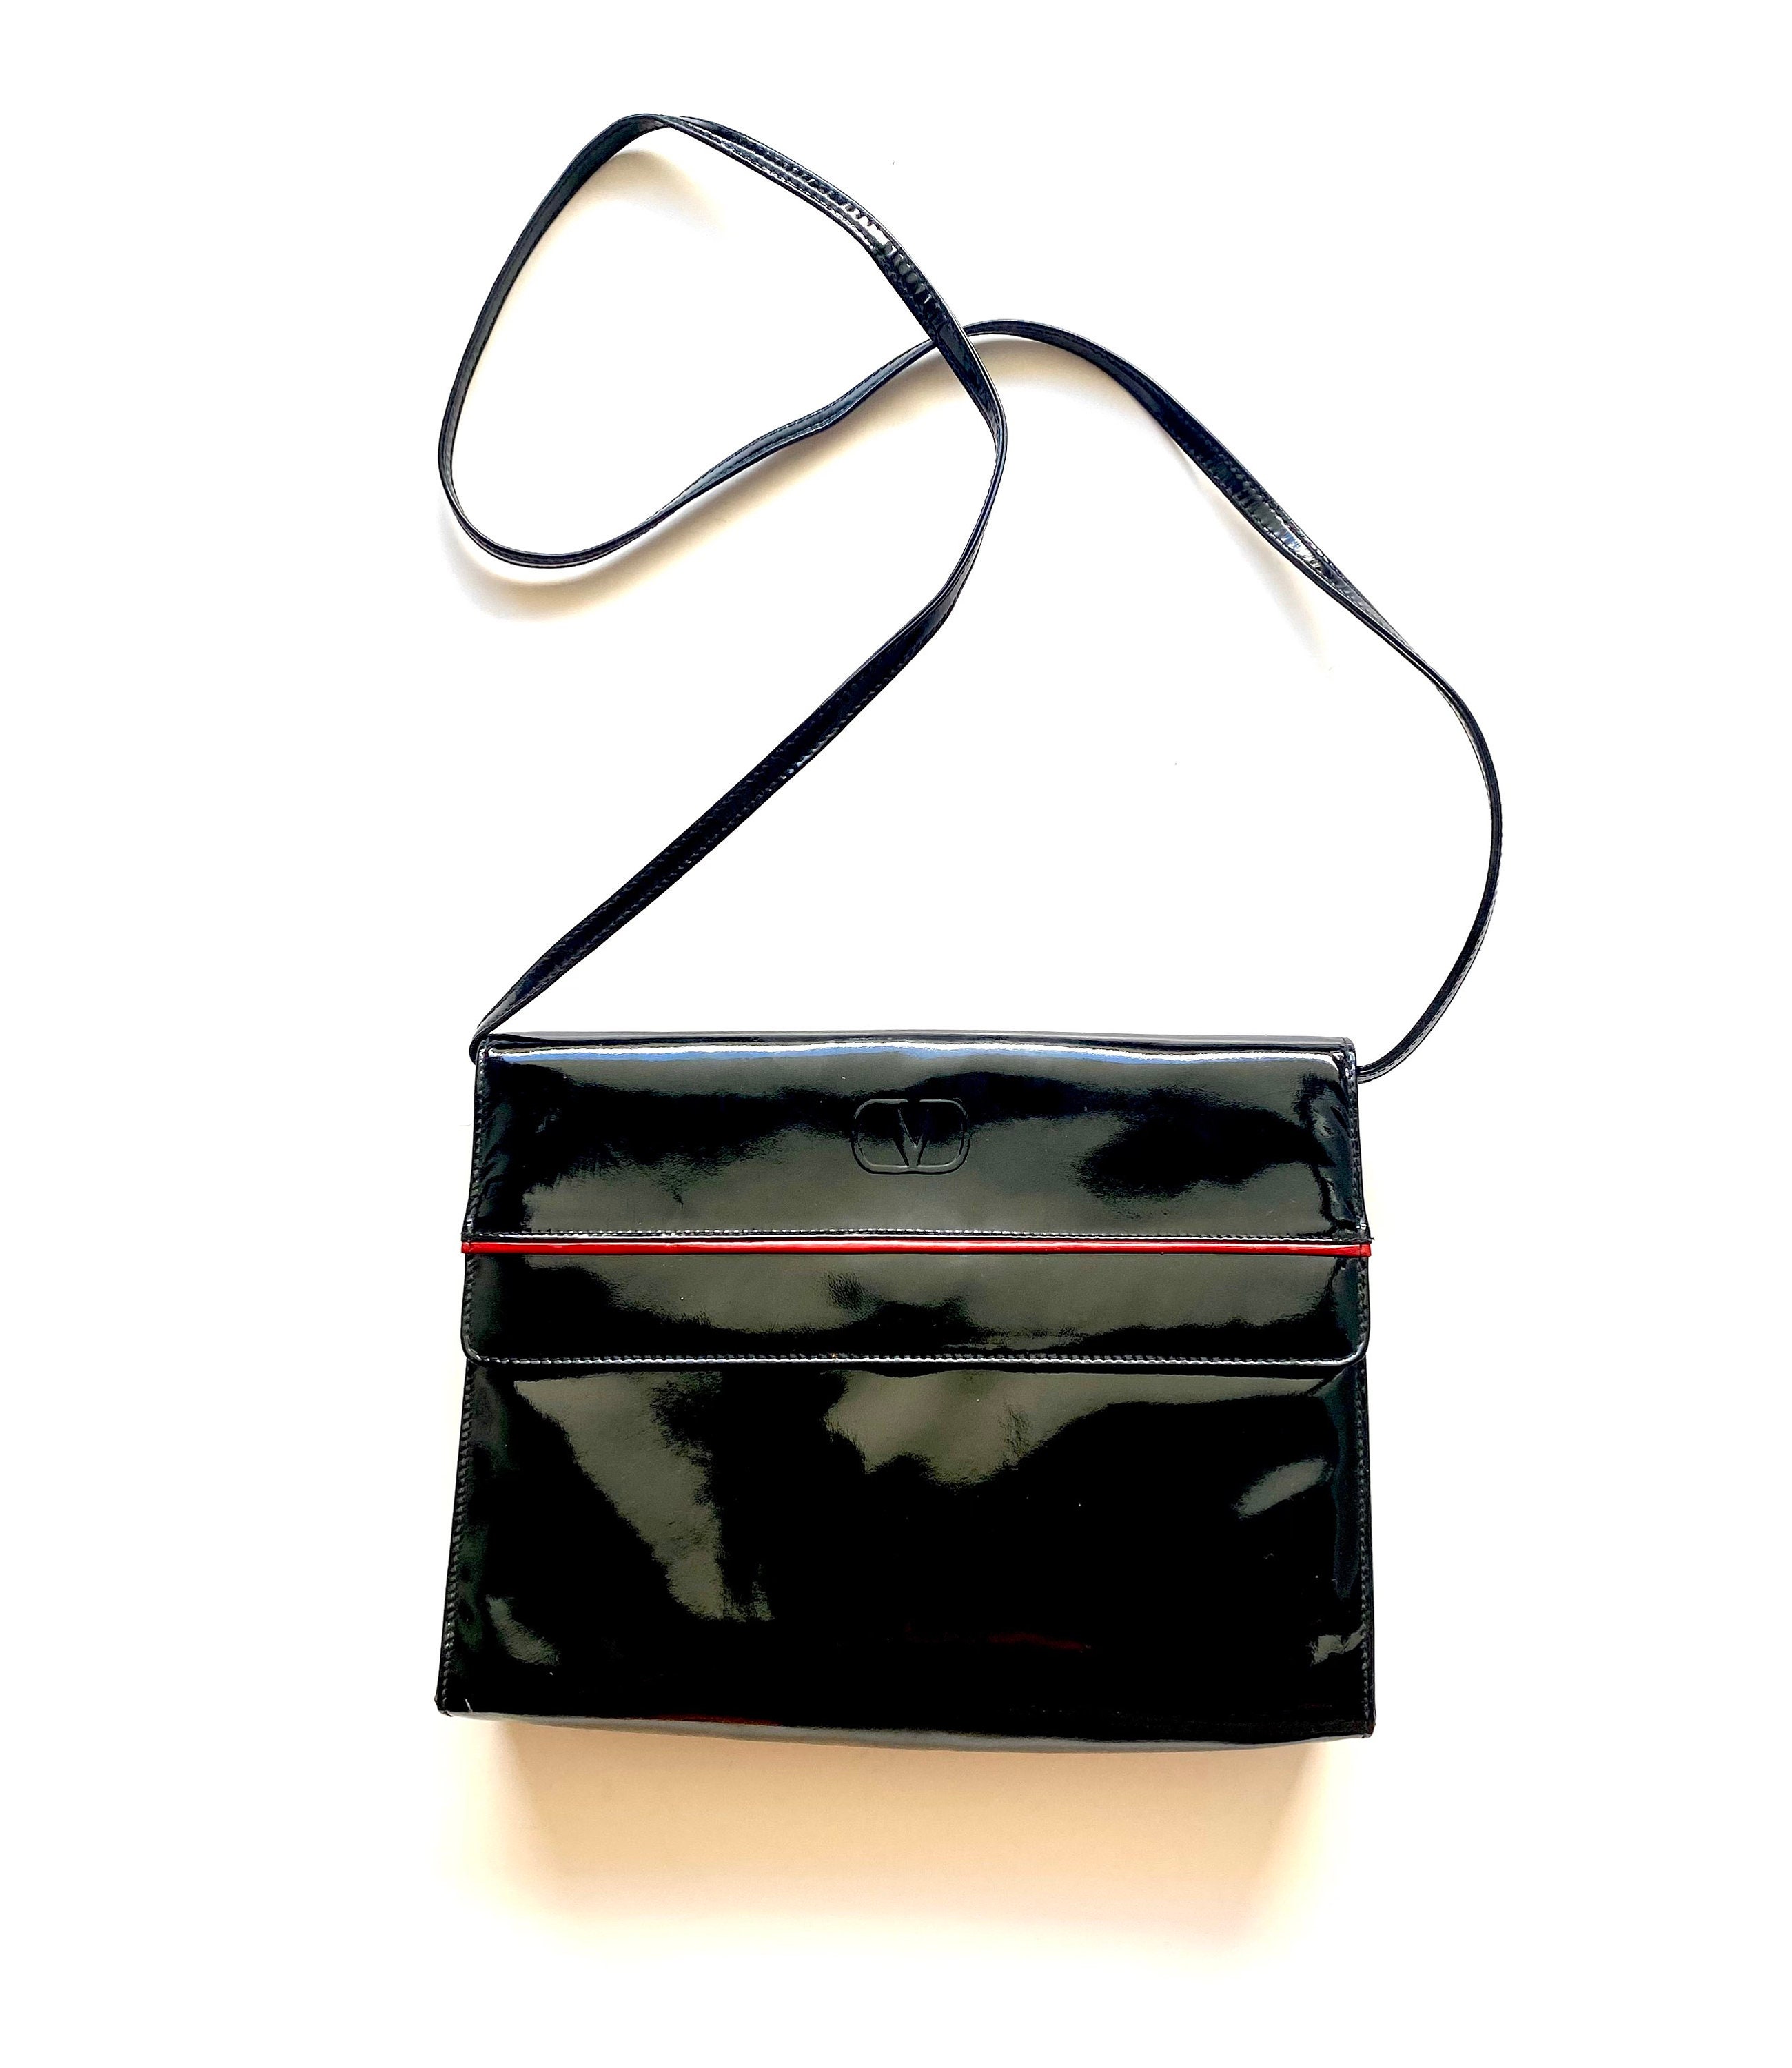 Black patent John Lewis shopper bag - Vinted